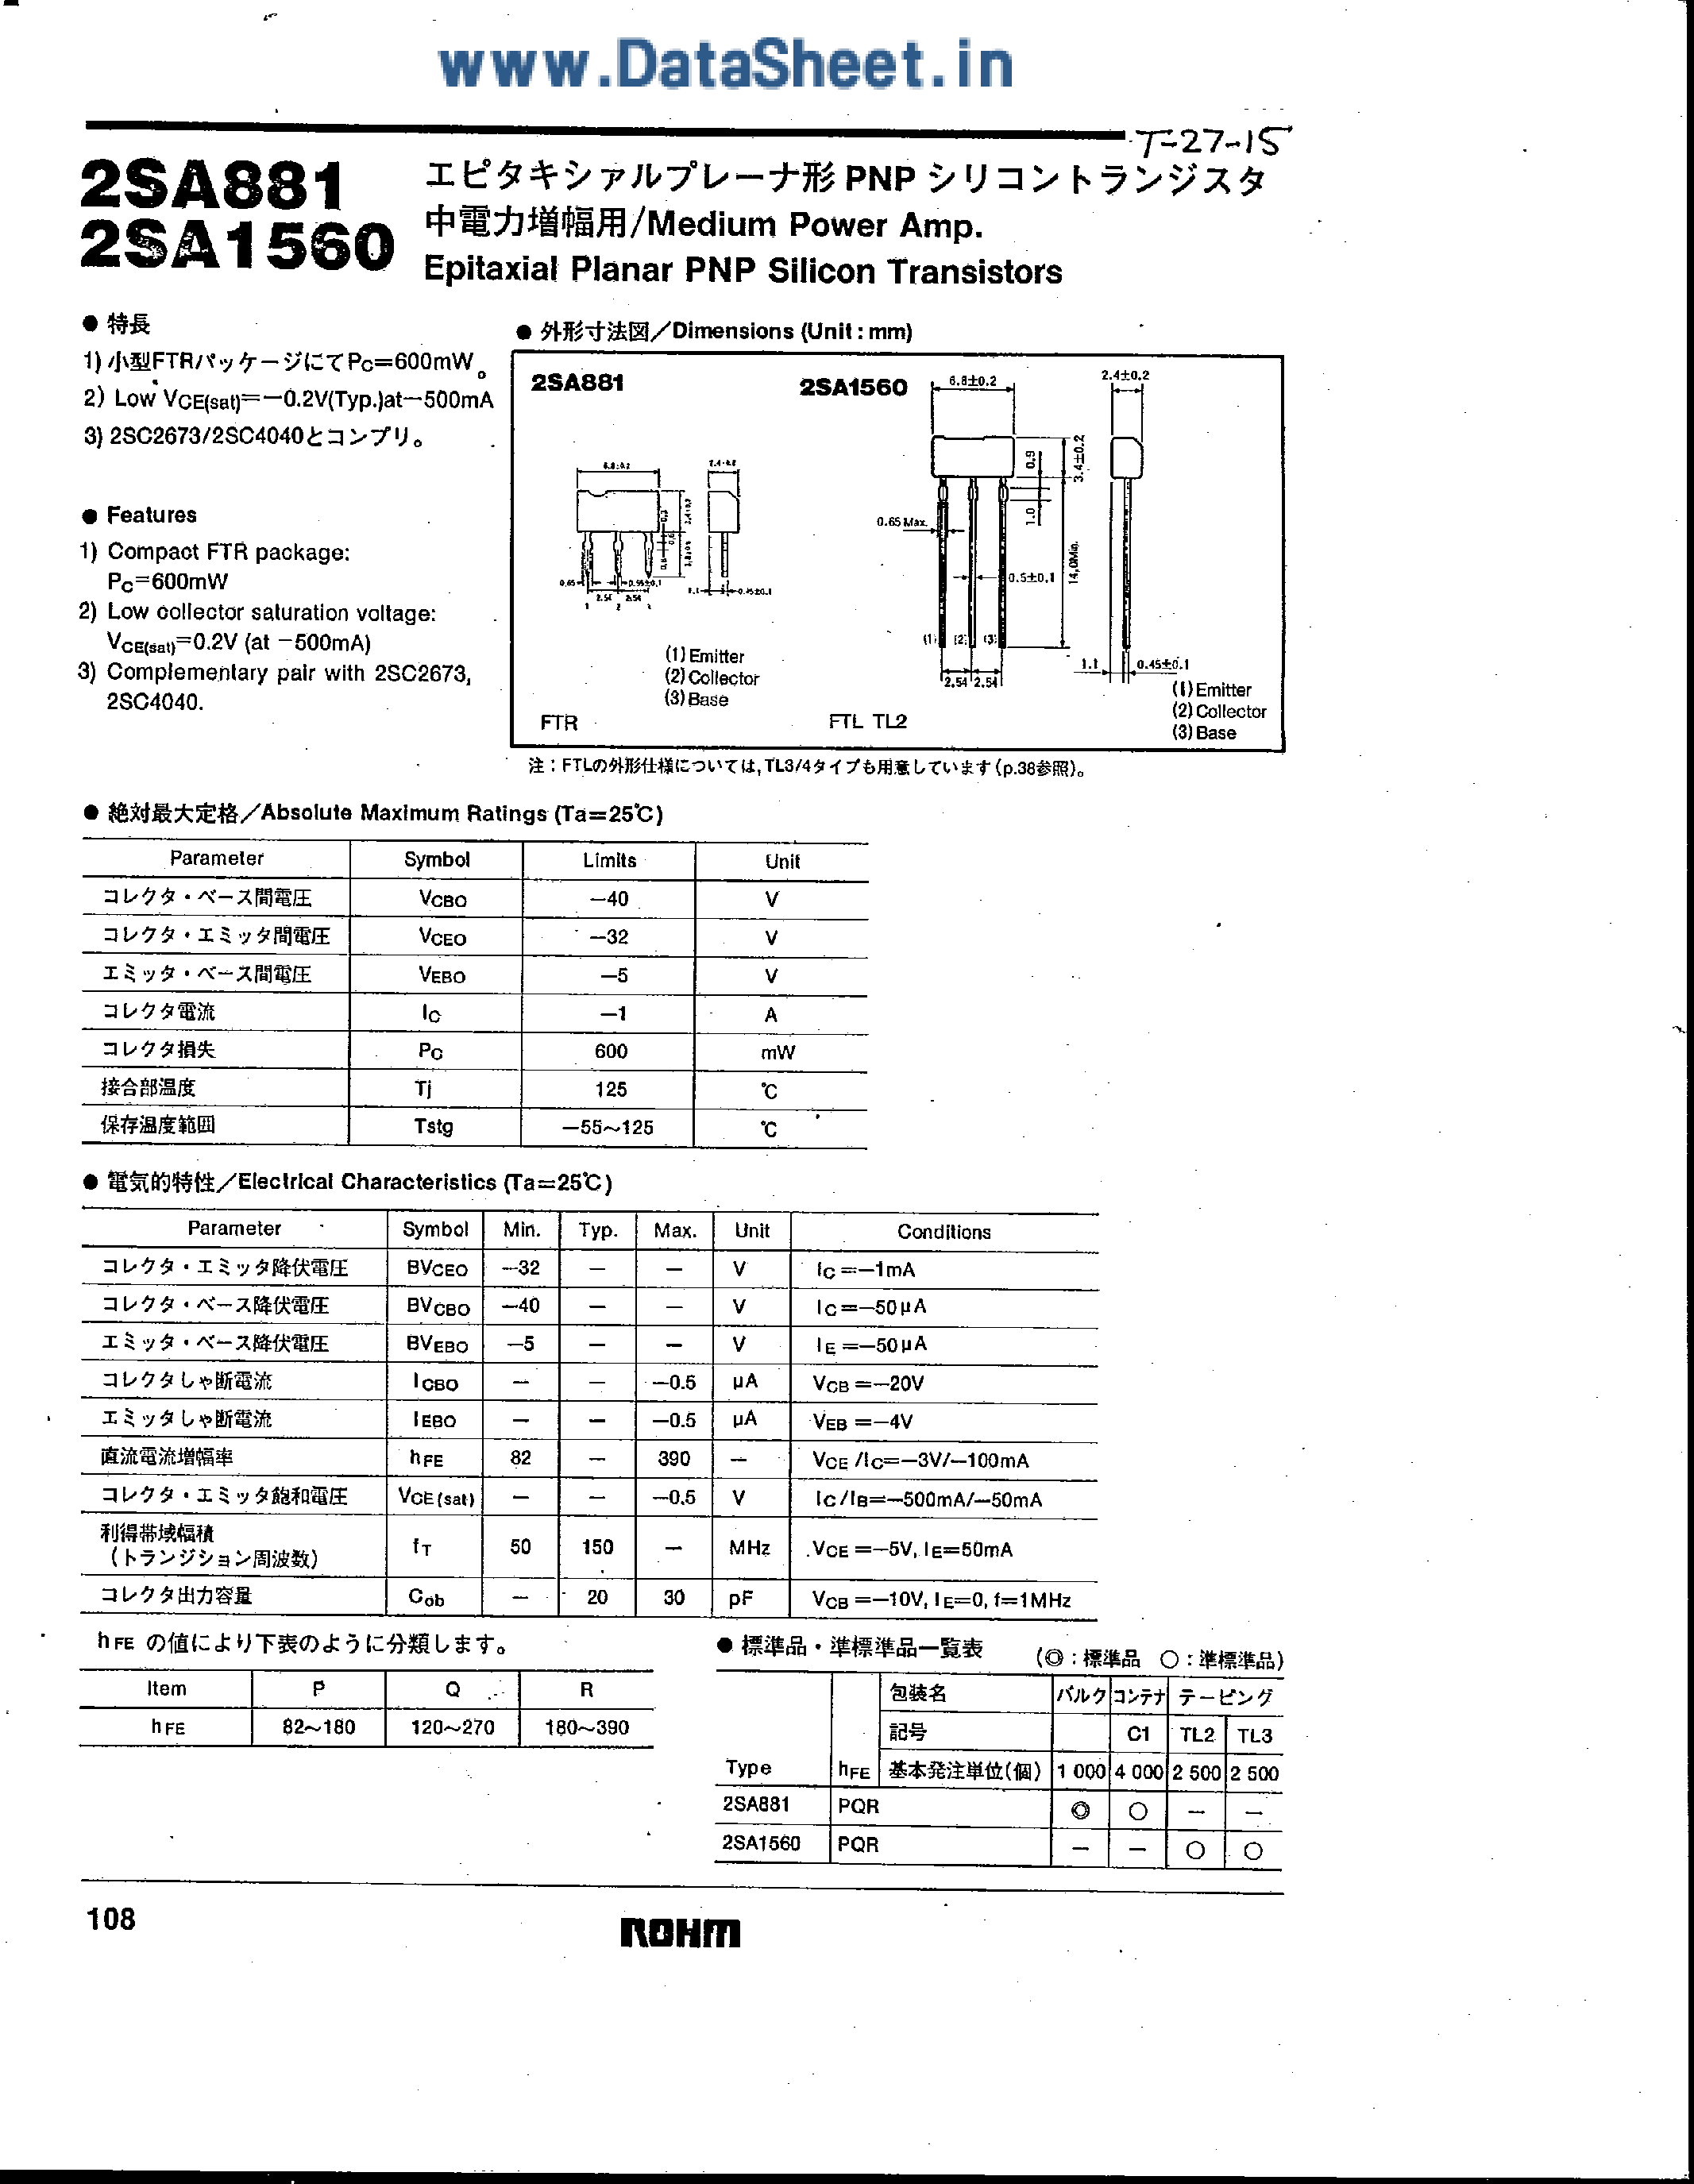 Даташит 2SA1560 - (2SA1560 / 2SA881) Epitaxial Planar PNP Silicon Transistors страница 1